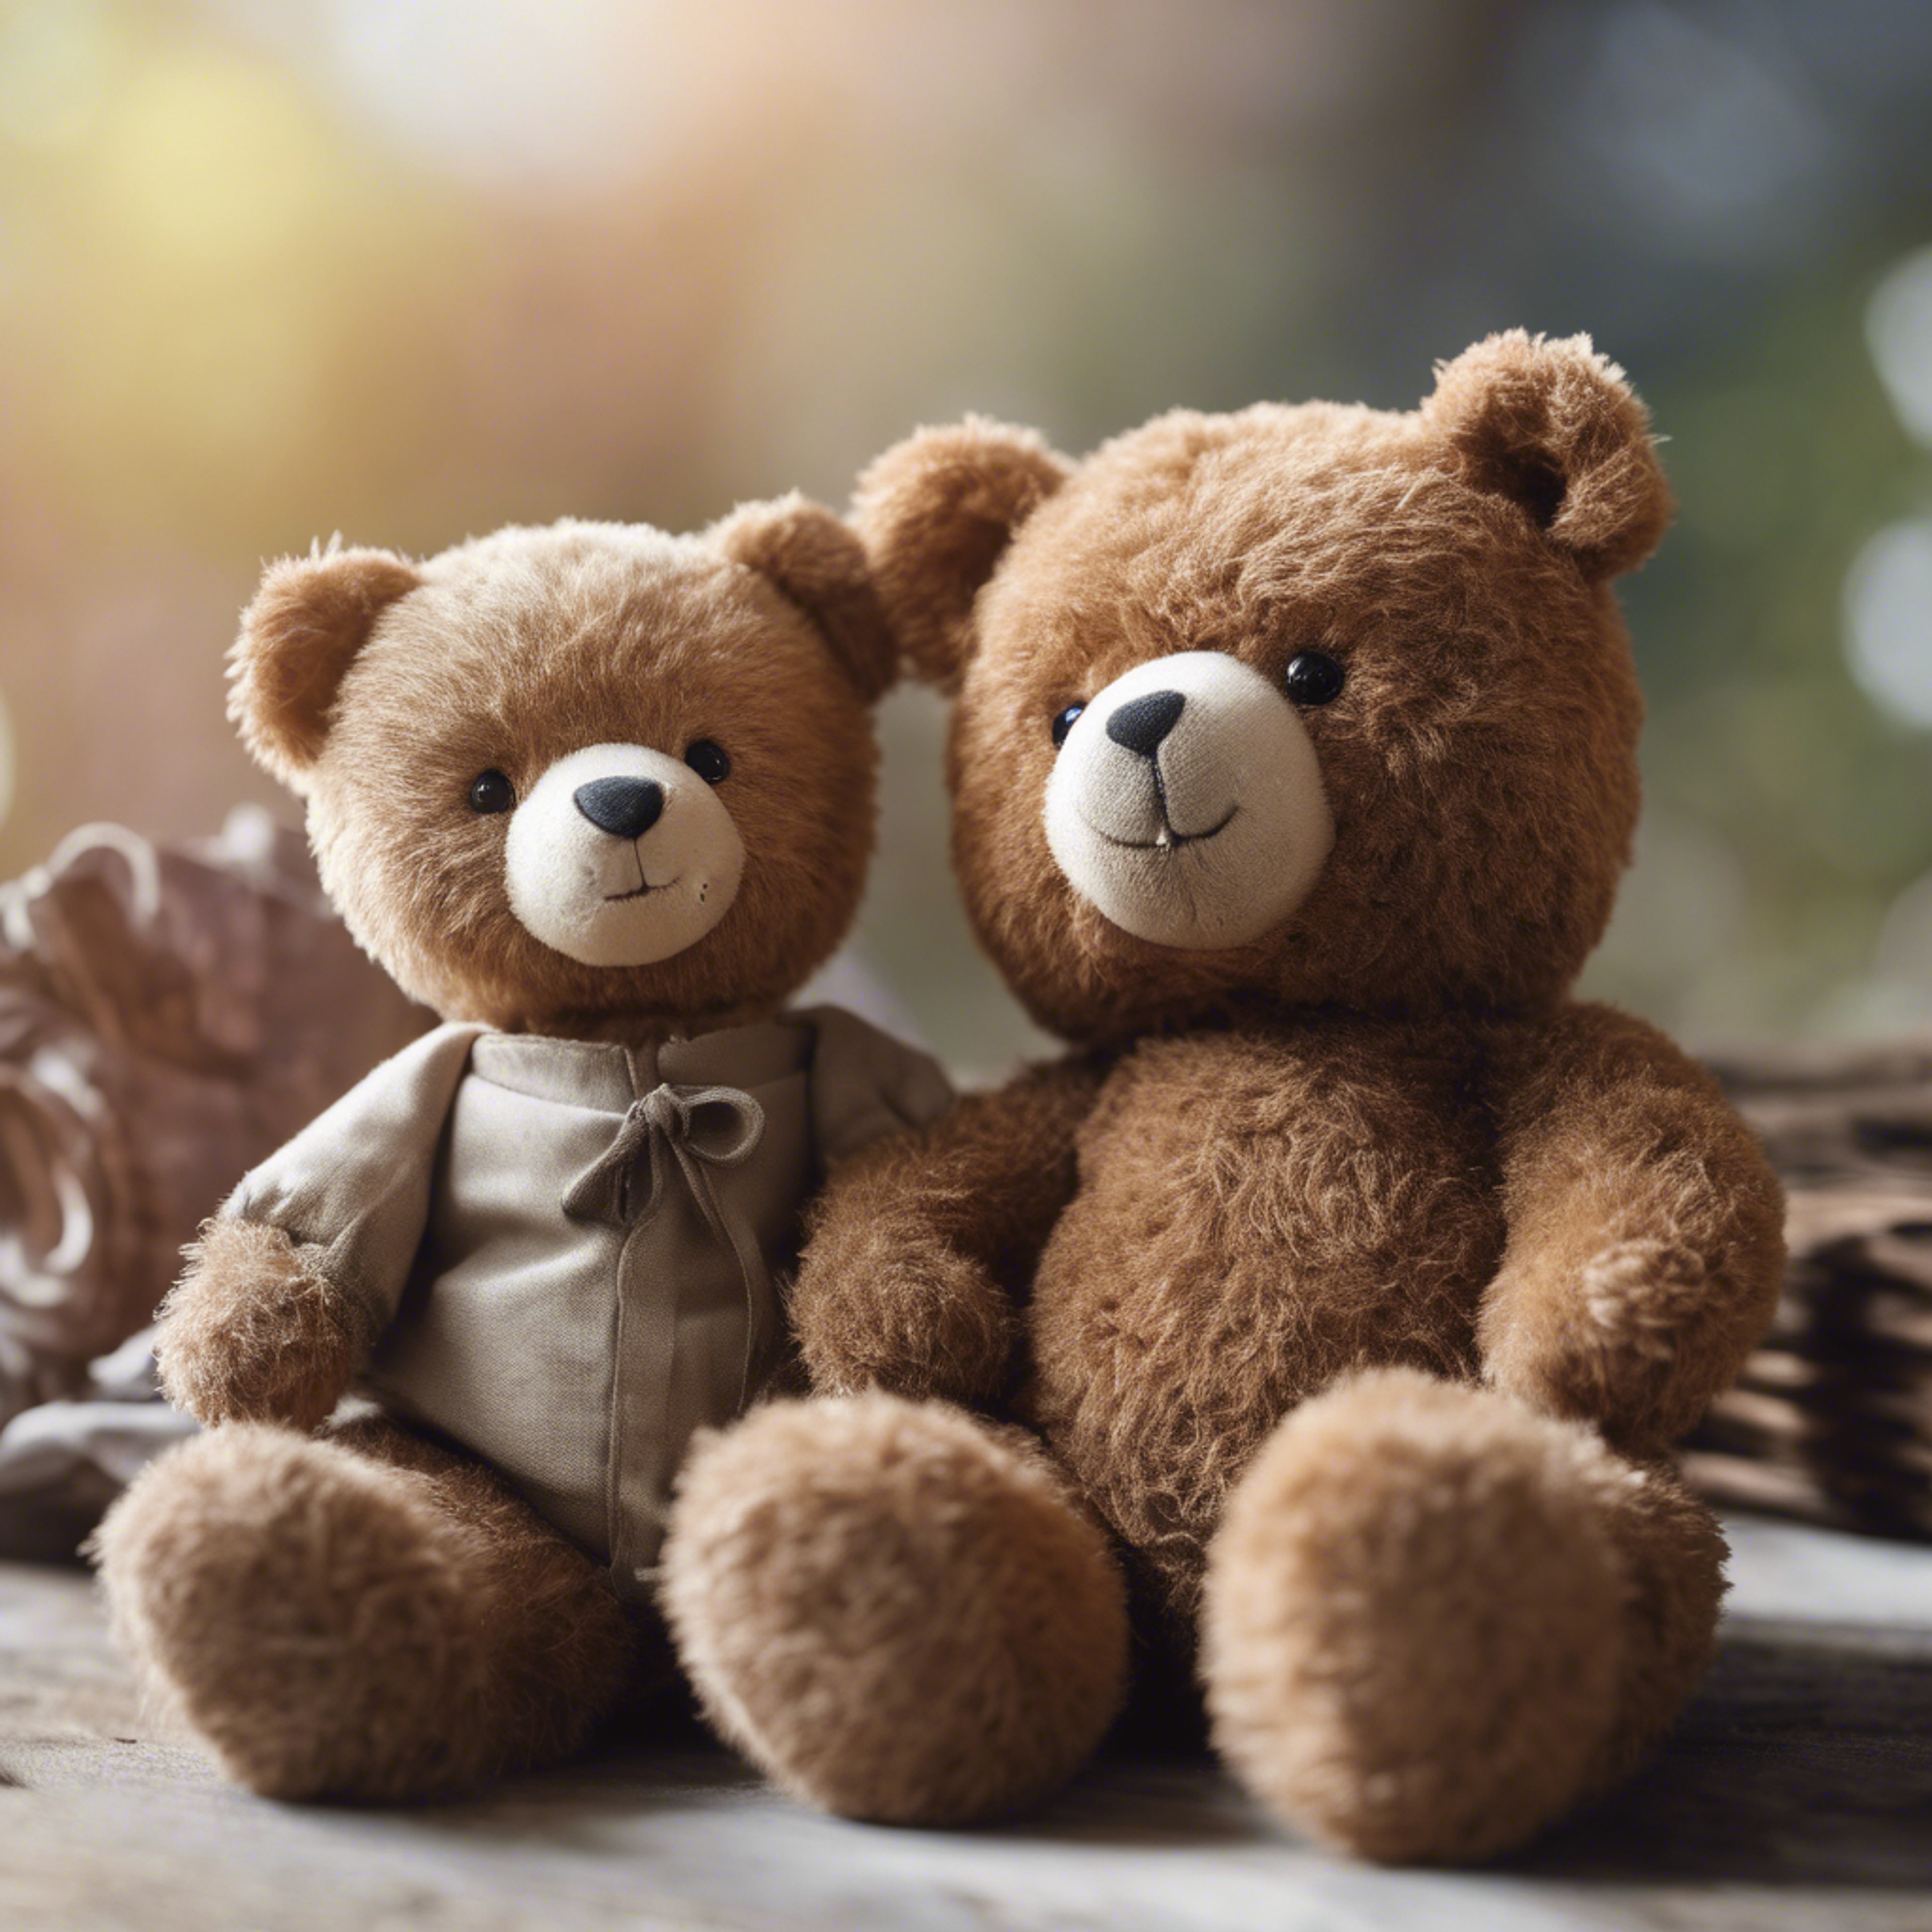 A teddy bear and a real bear cub sitting side by side comparing sizes. Tapet[ecf7dbb664a44b6083b1]